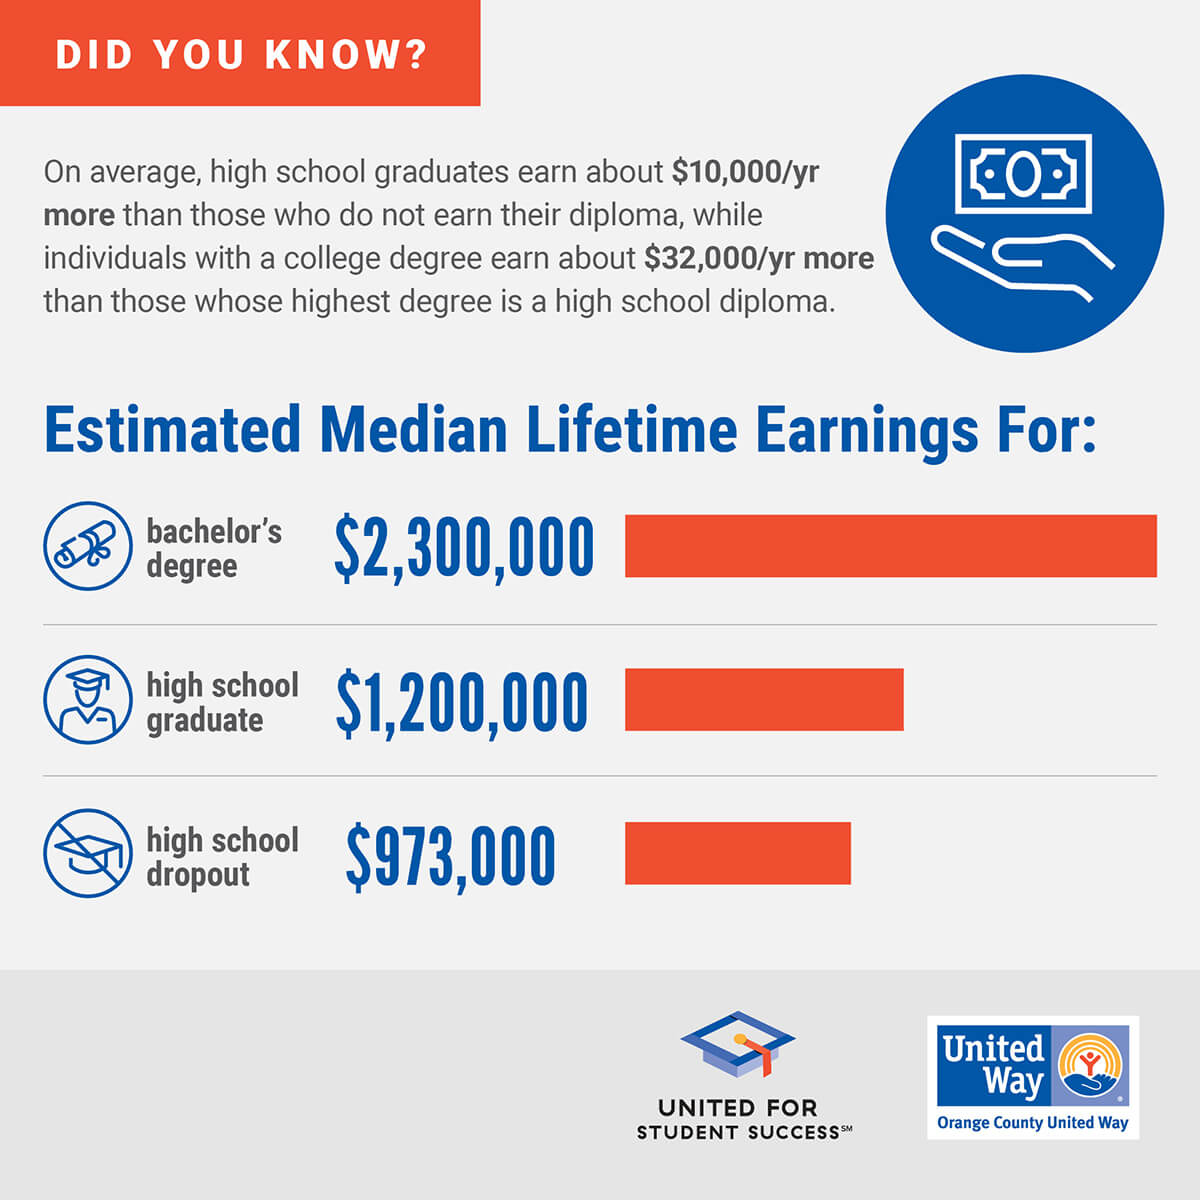 Estimated median lifetime earnings for a bachelor's degree recipient vs H.S. graduate vs H.S. dropout